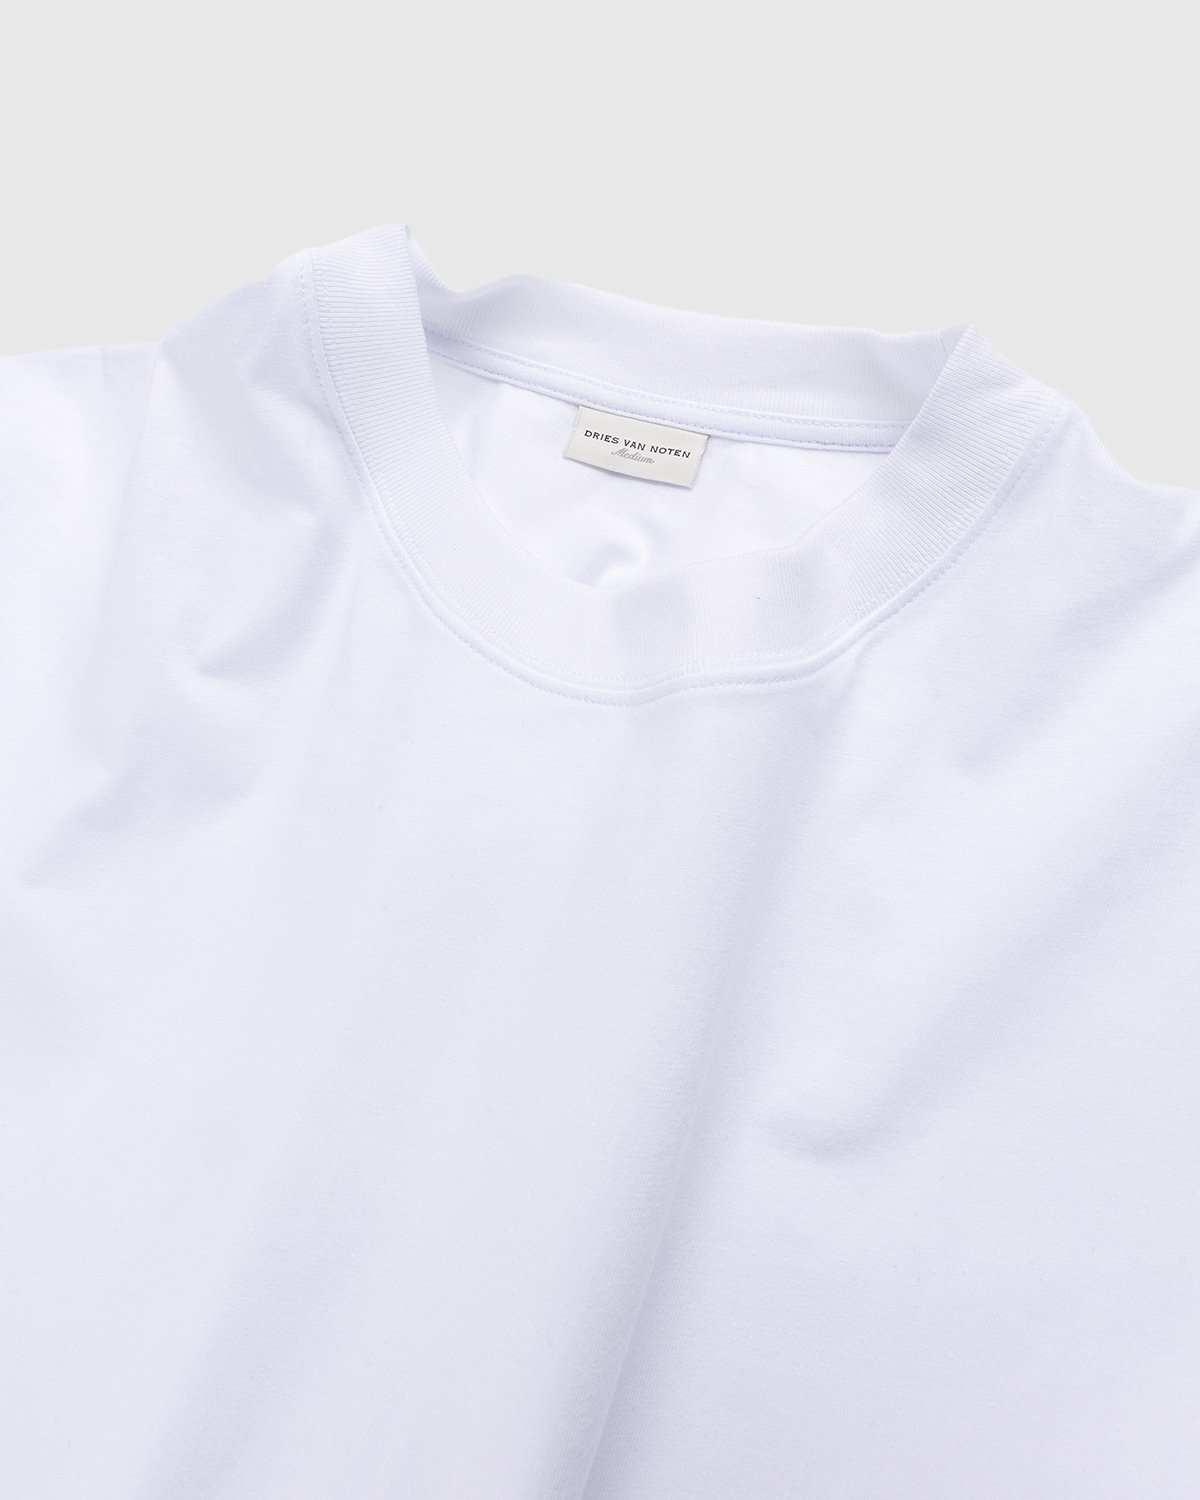 Dries van Noten - Hen Oversized T-Shirt White - Clothing - White - Image 3